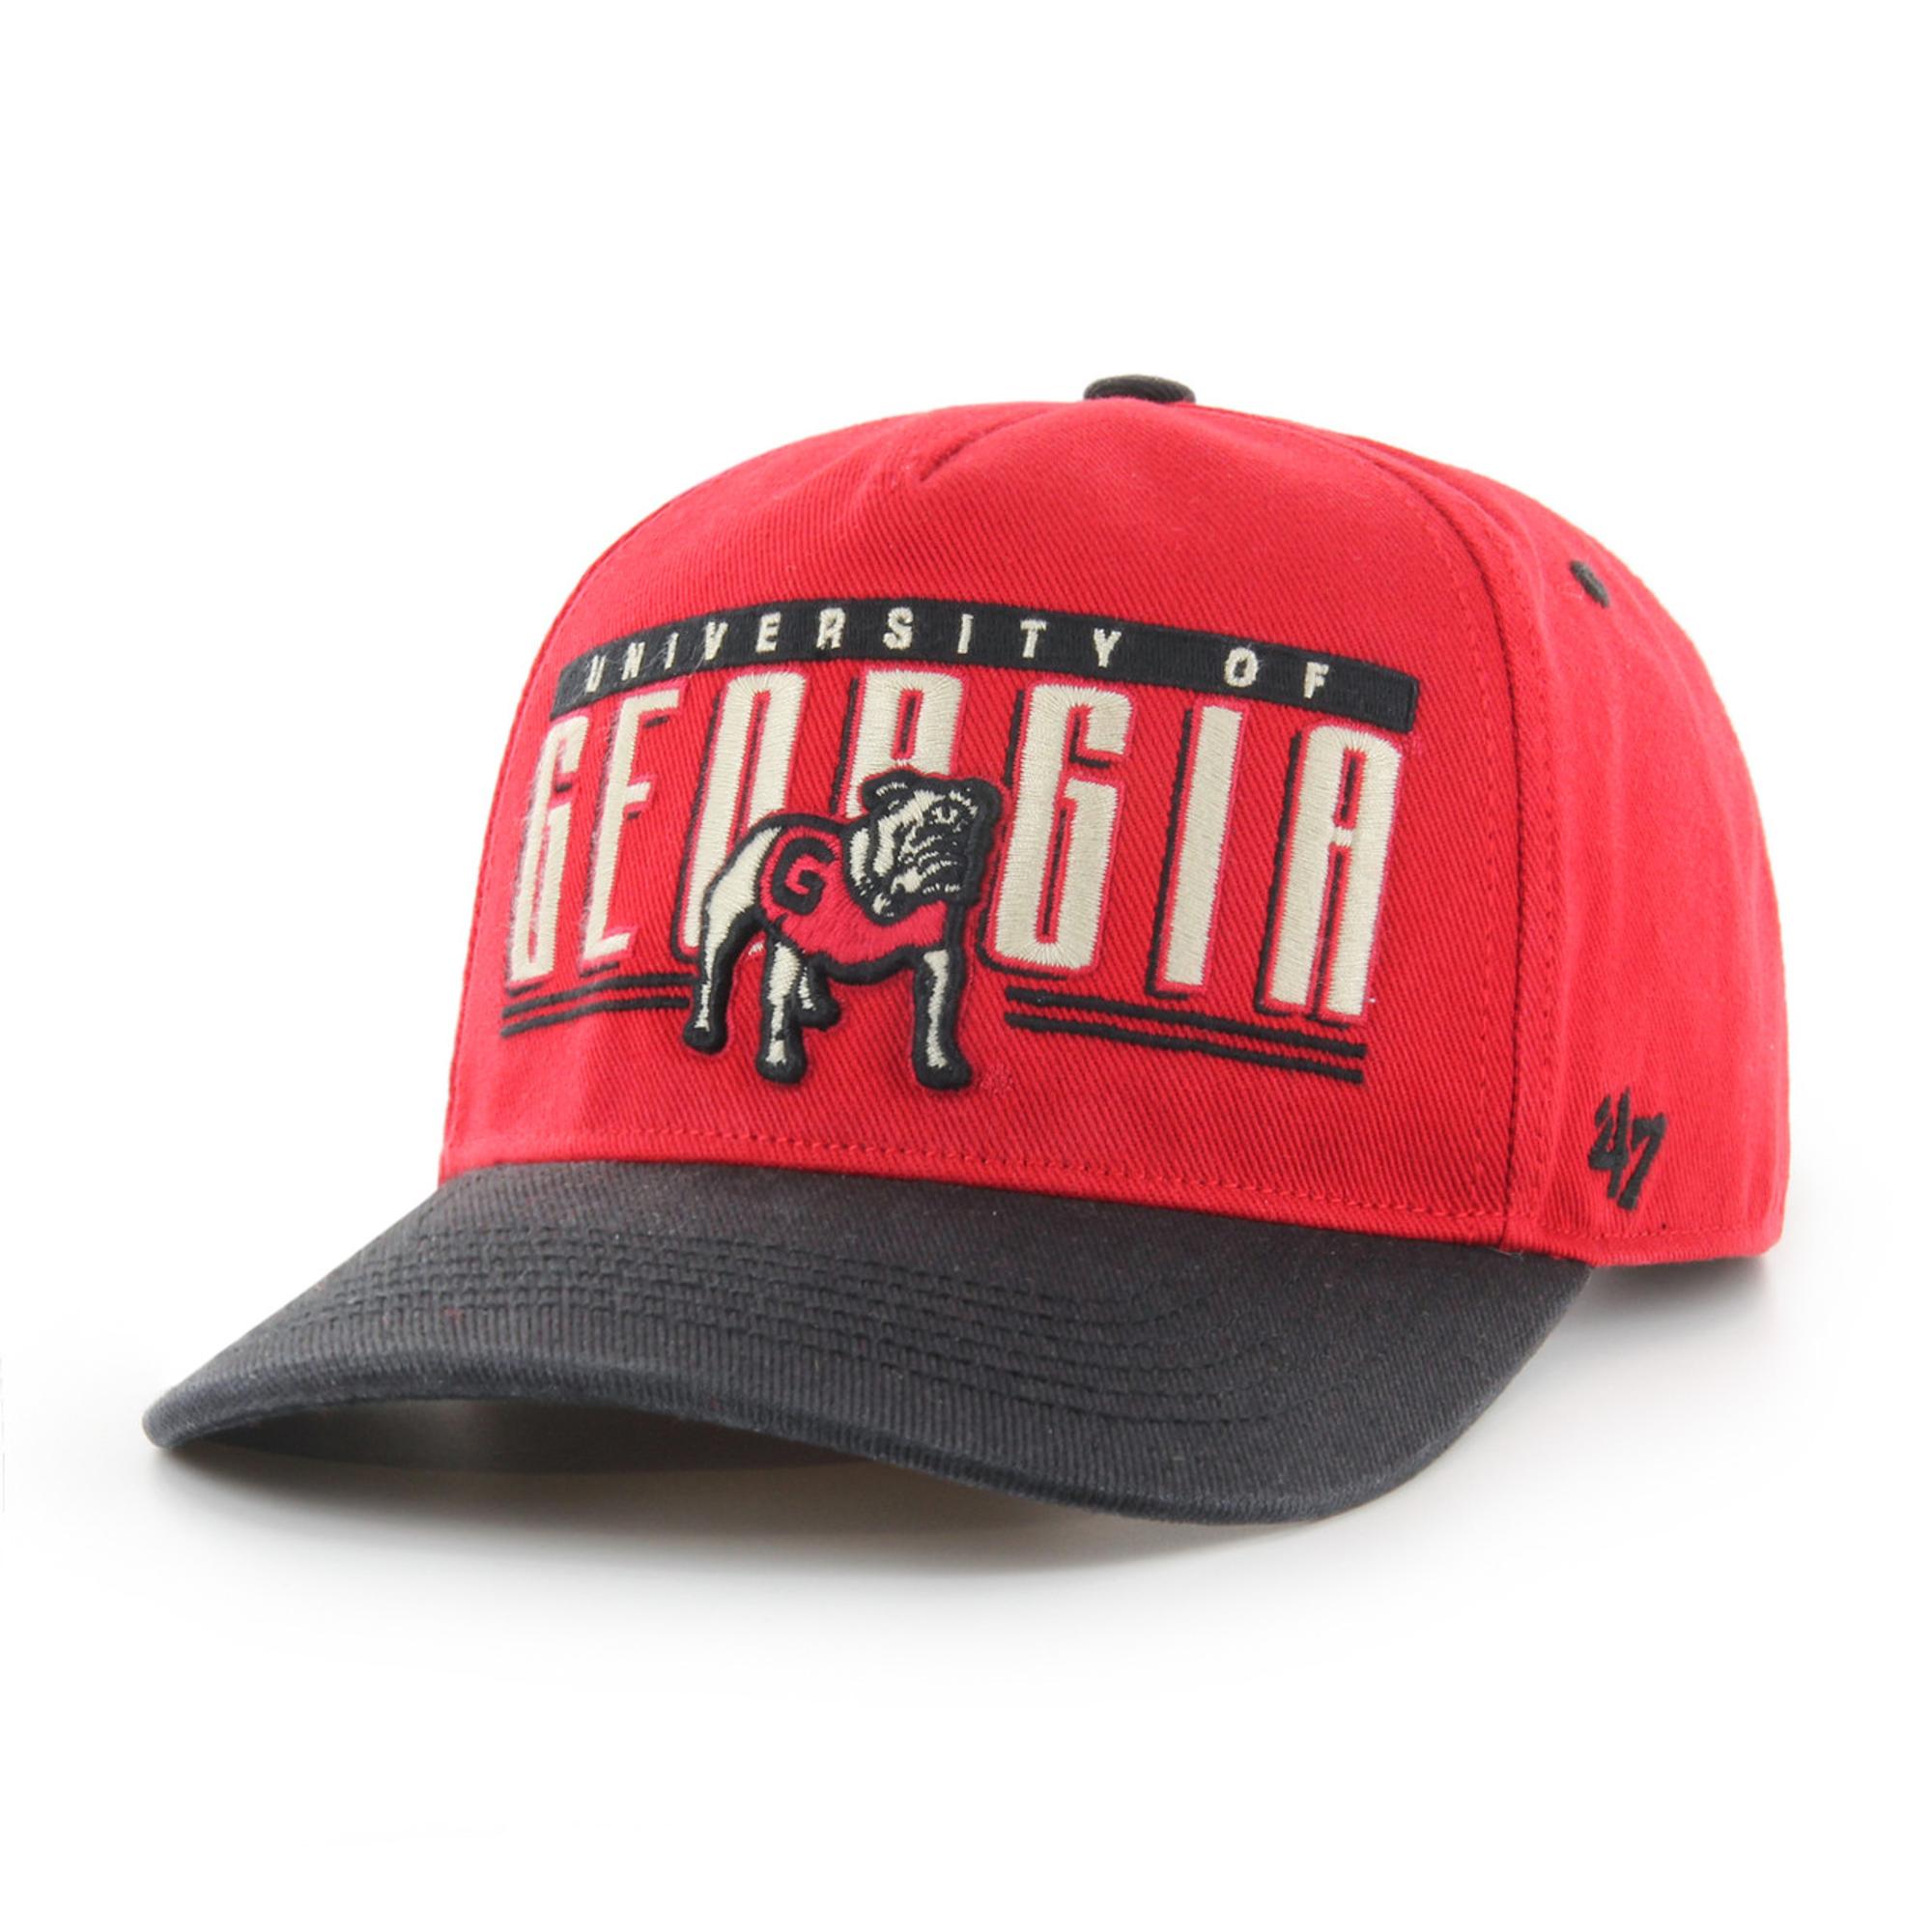 Georgia Bulldogs Red Double Header Baseline Hat